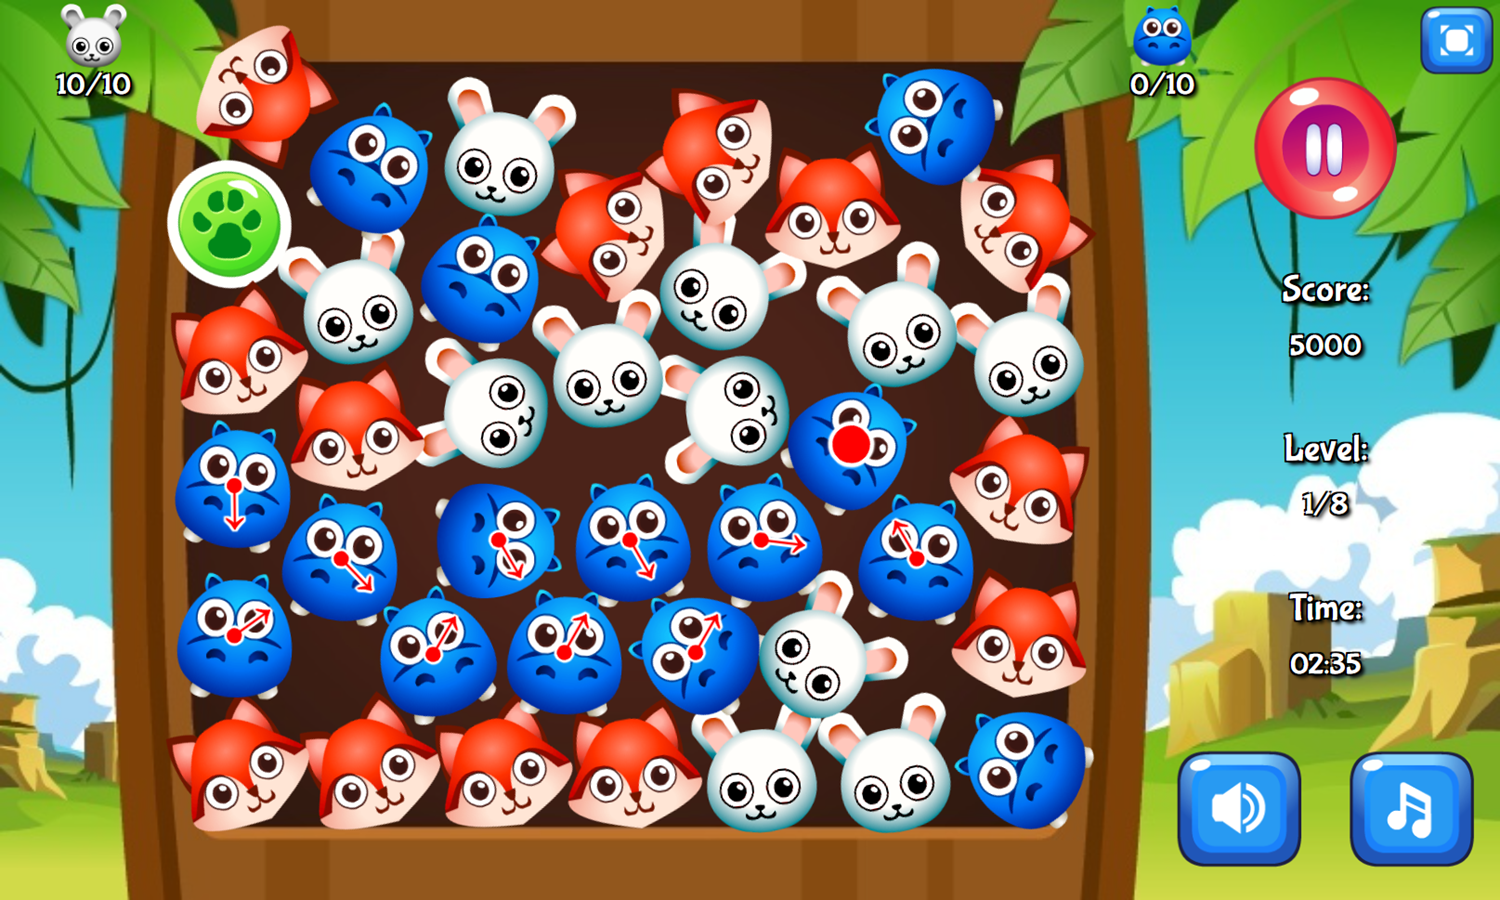 Plushy Animals Game Level Play Screenshot.